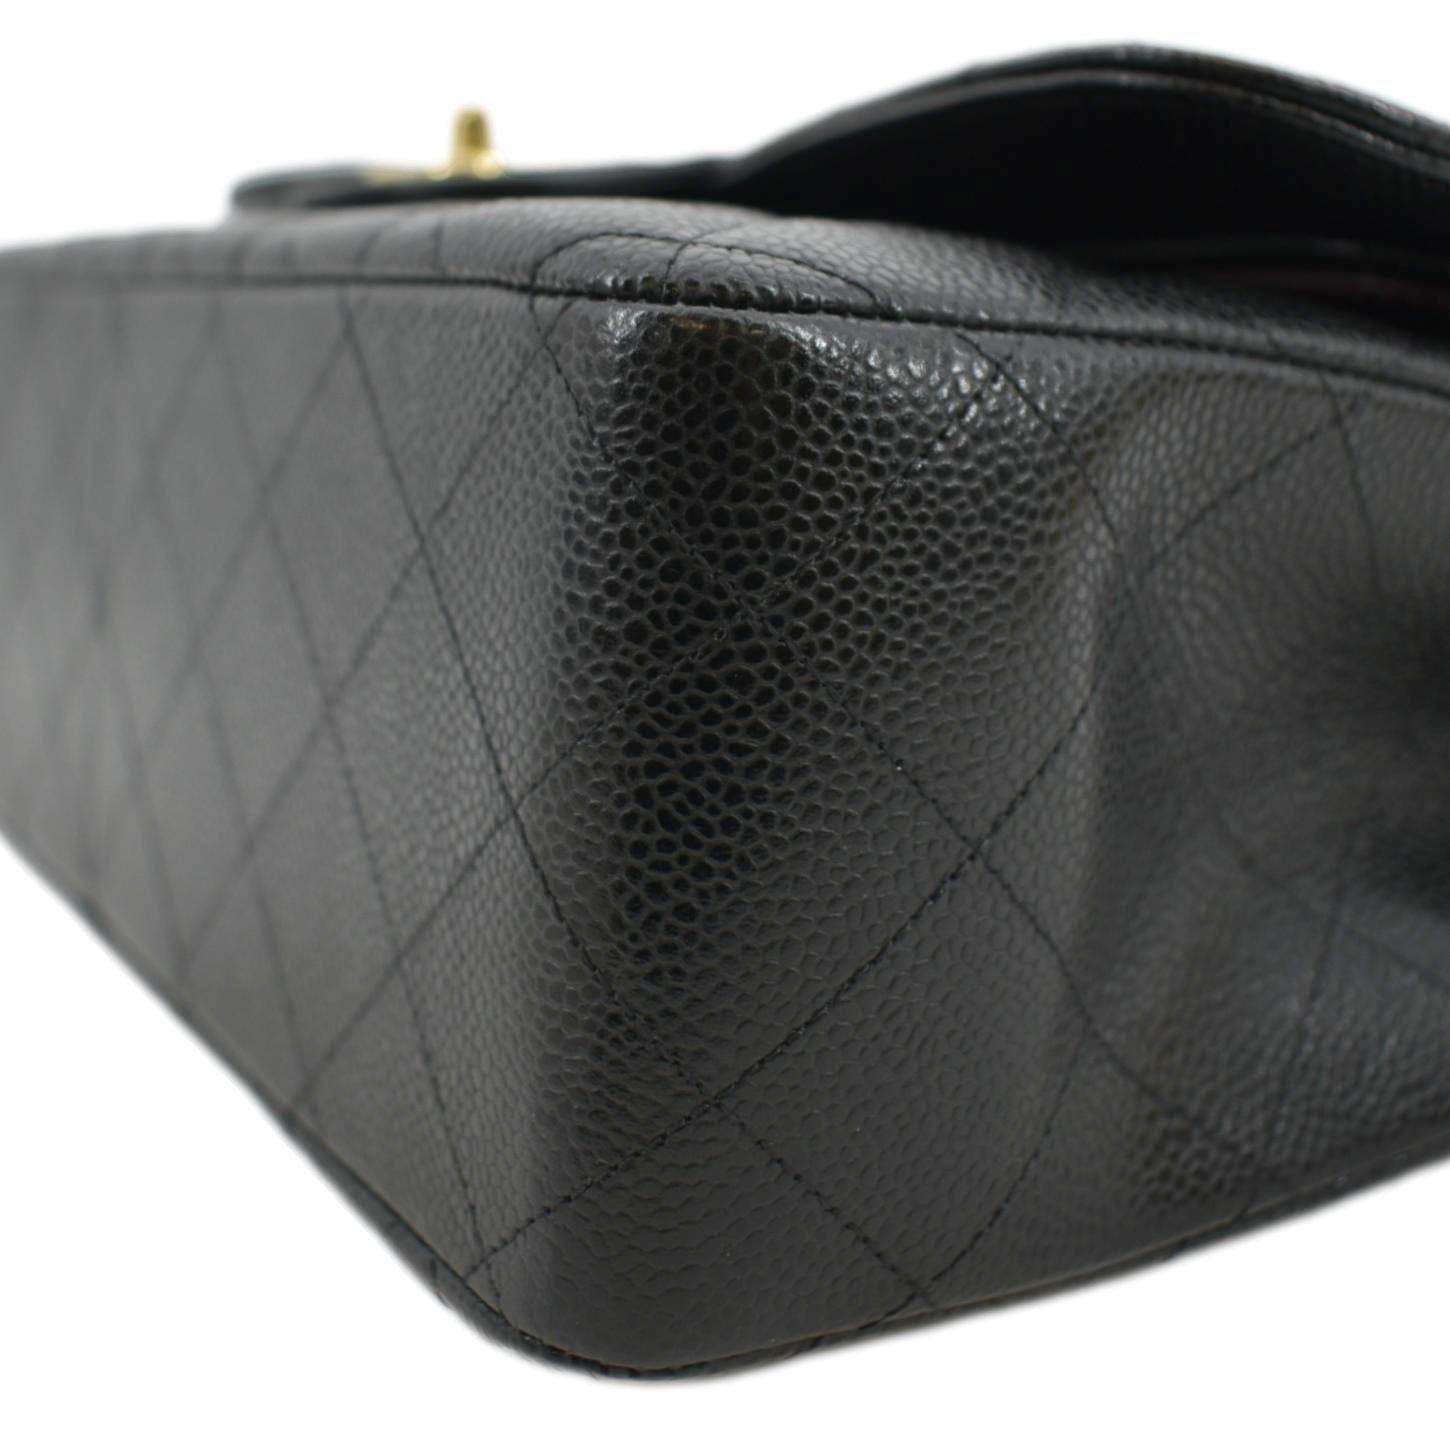 Chanel Classic Medium Timeless Double Flap Bag Black Lambskin Leather